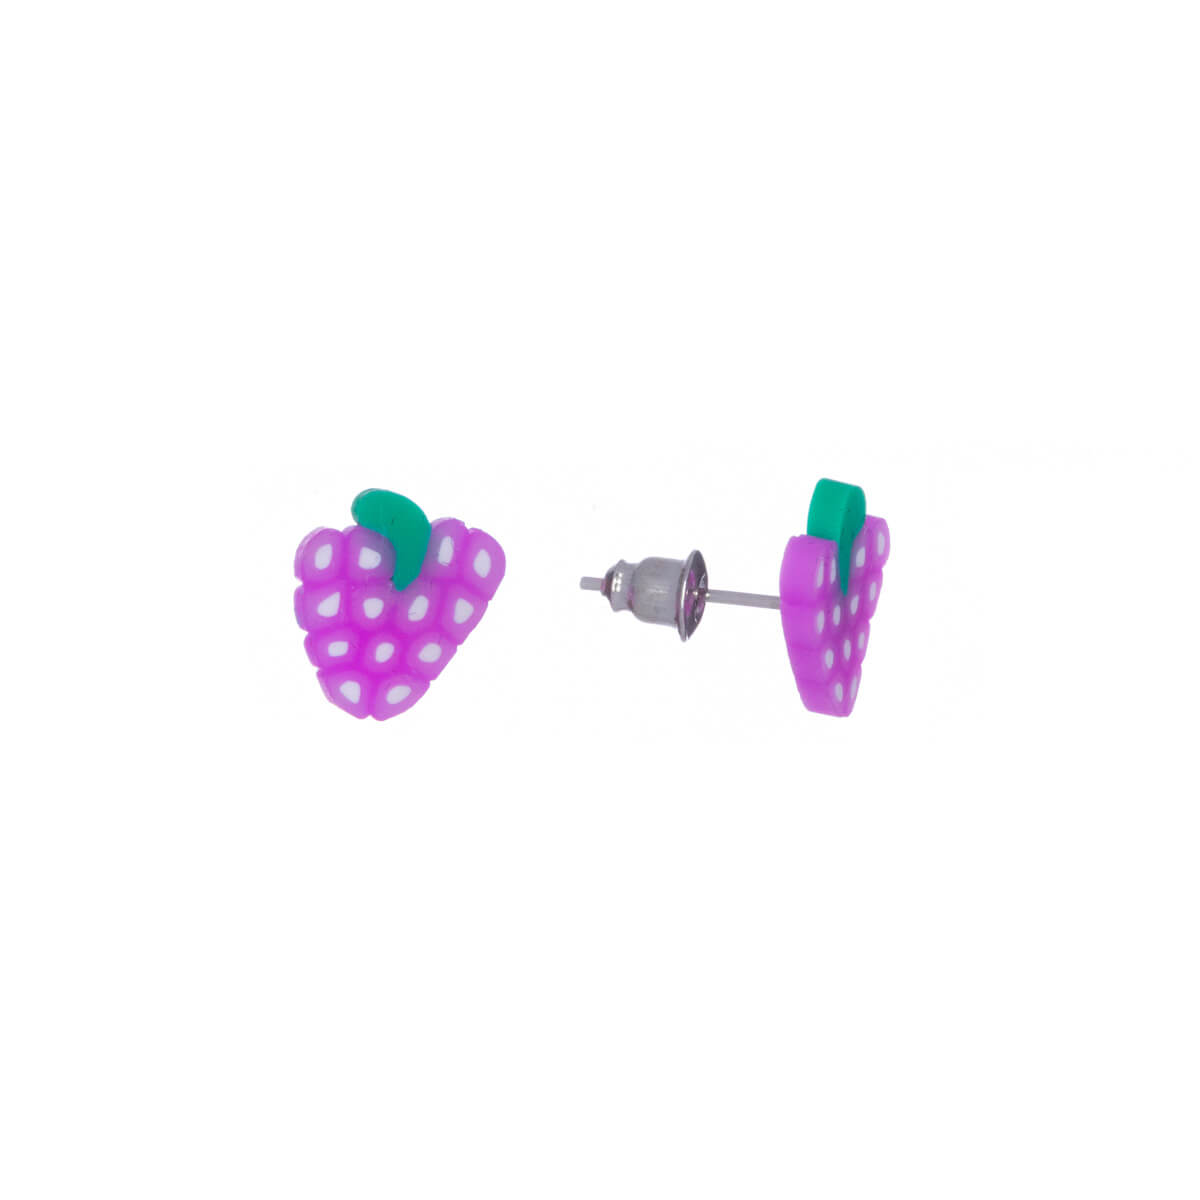 Grape fruit earrings